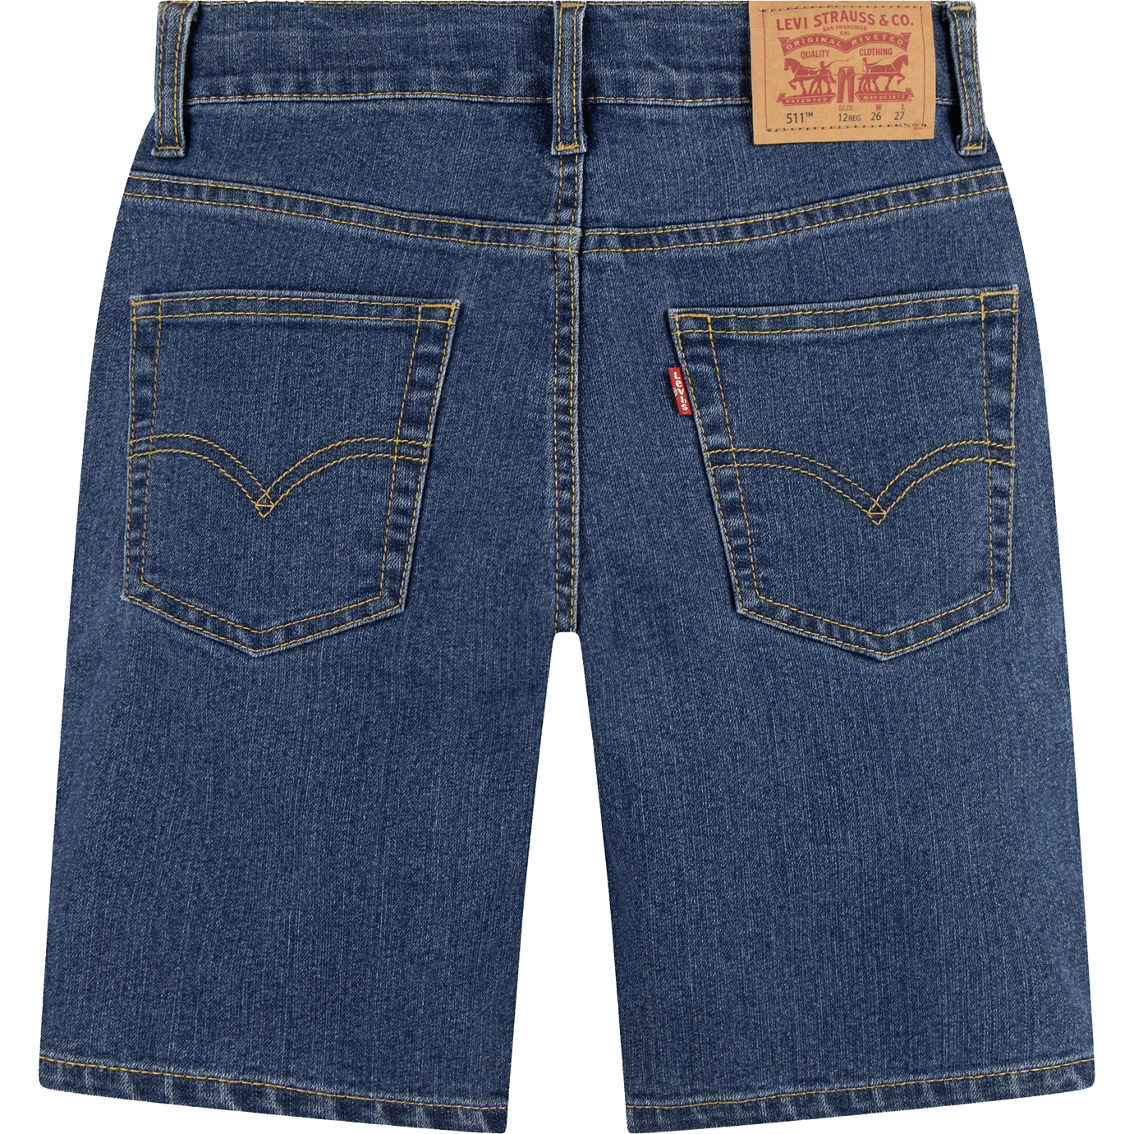 Levi's Boys Slim Fit Classic Shorts - Image 2 of 5